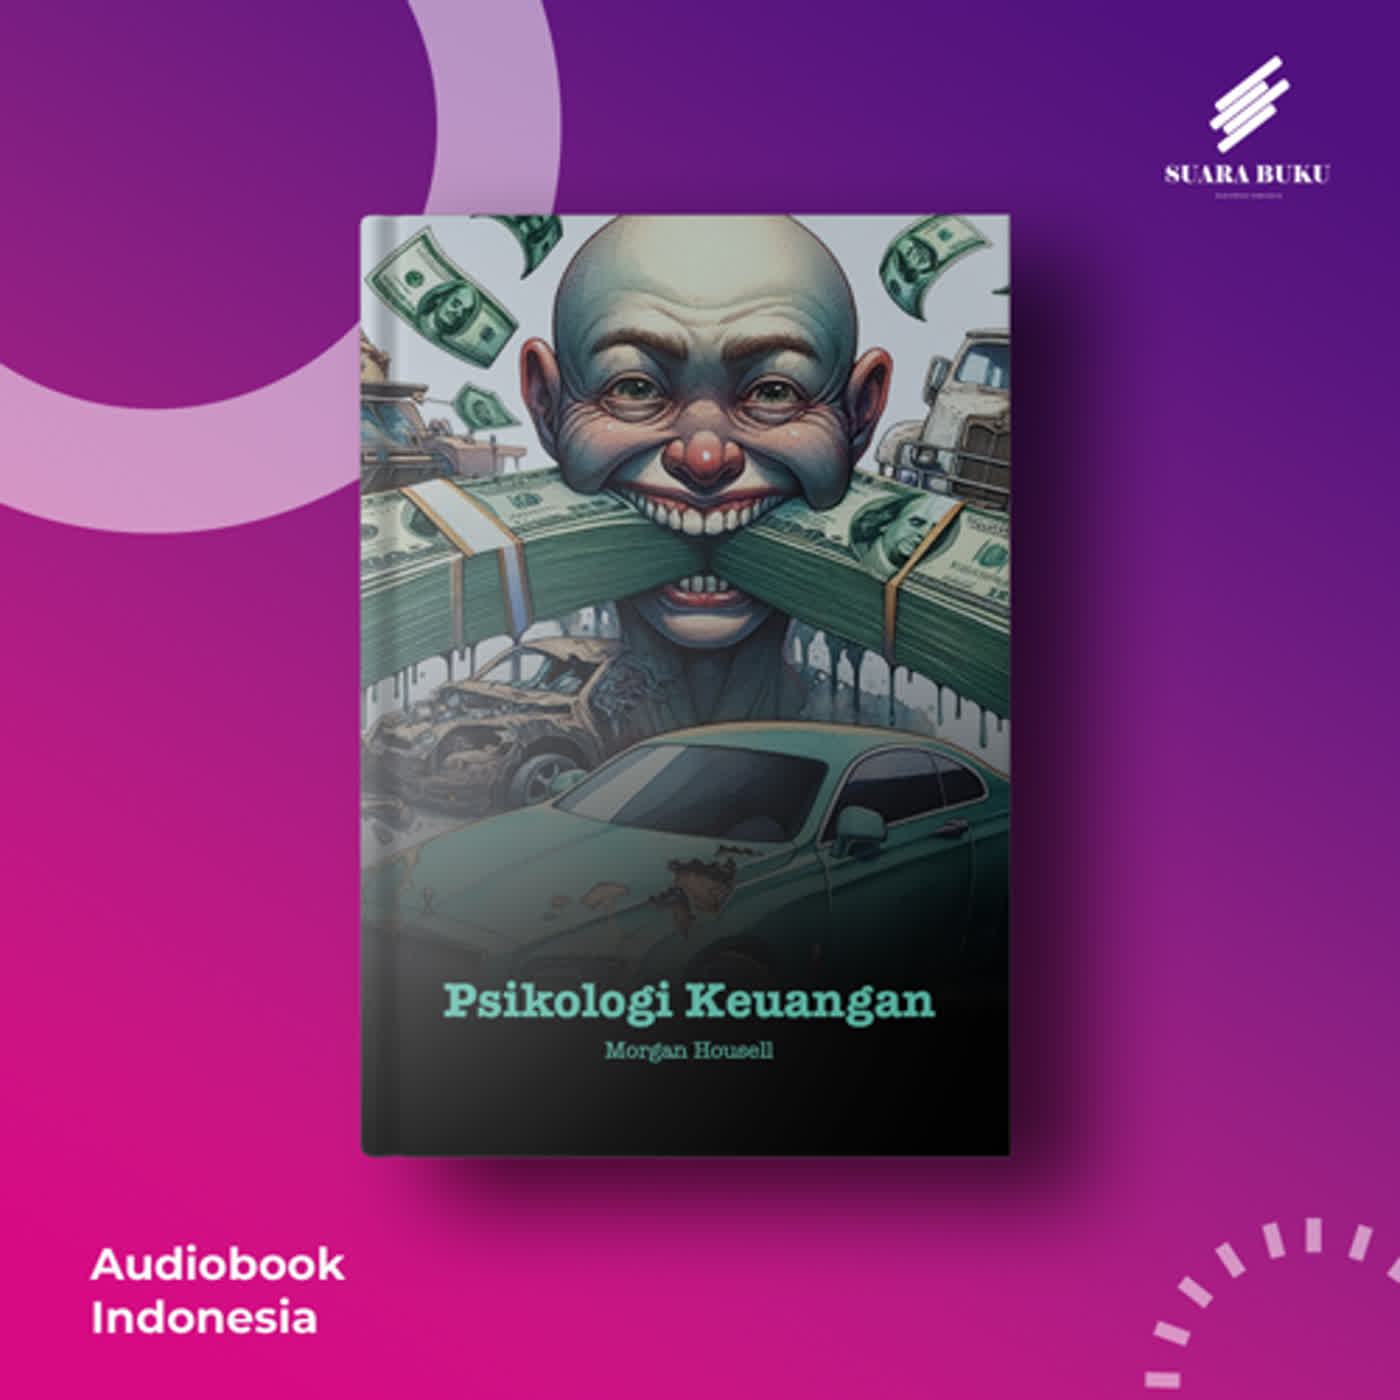 #6 Psikologi Keuangan Karya Morgan Housell - Audiobook Indonesia Suara Buku